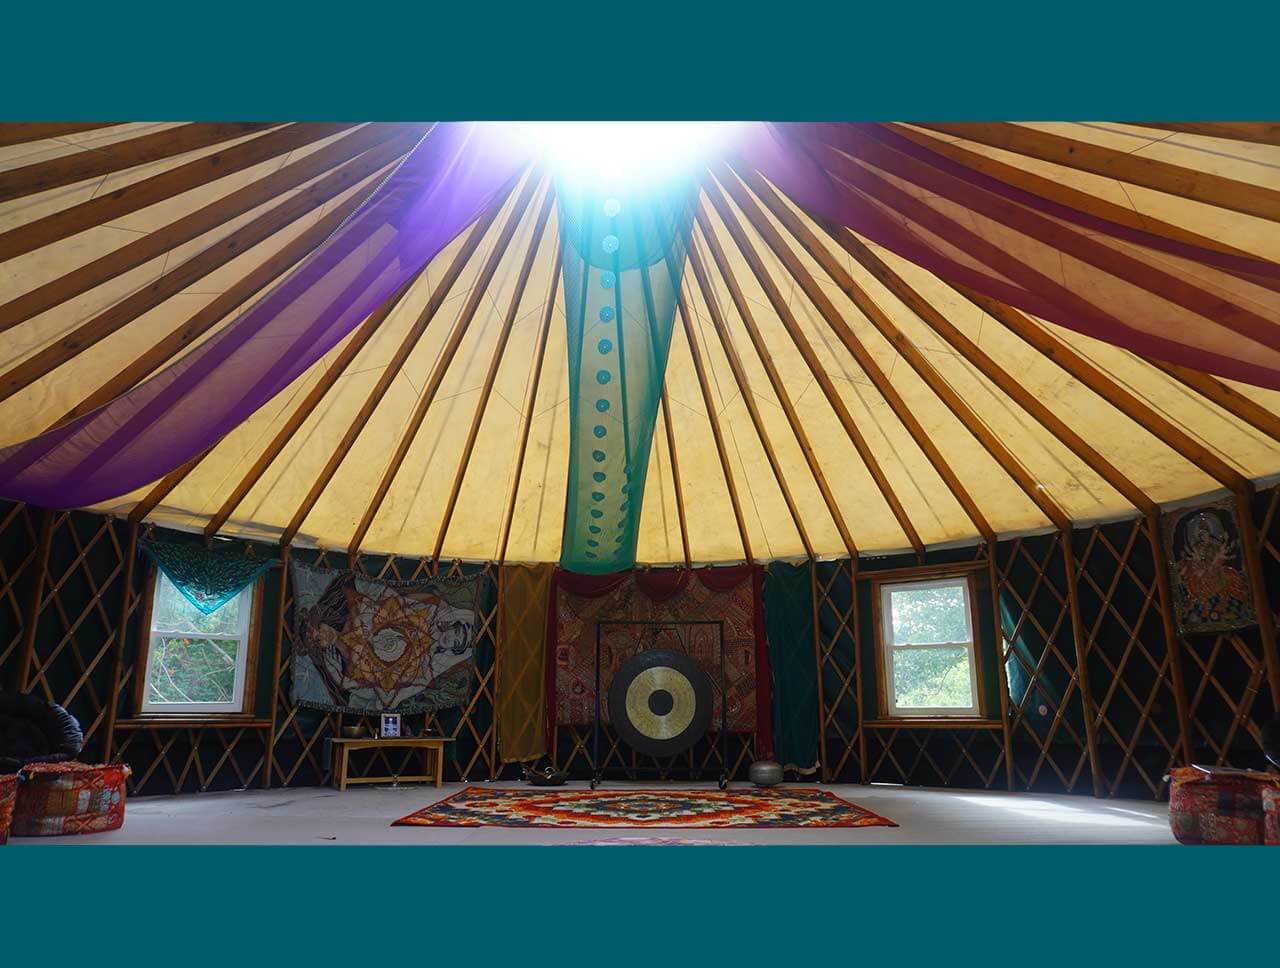 Interior view of yurt at Earthsong Foundation Hawaii